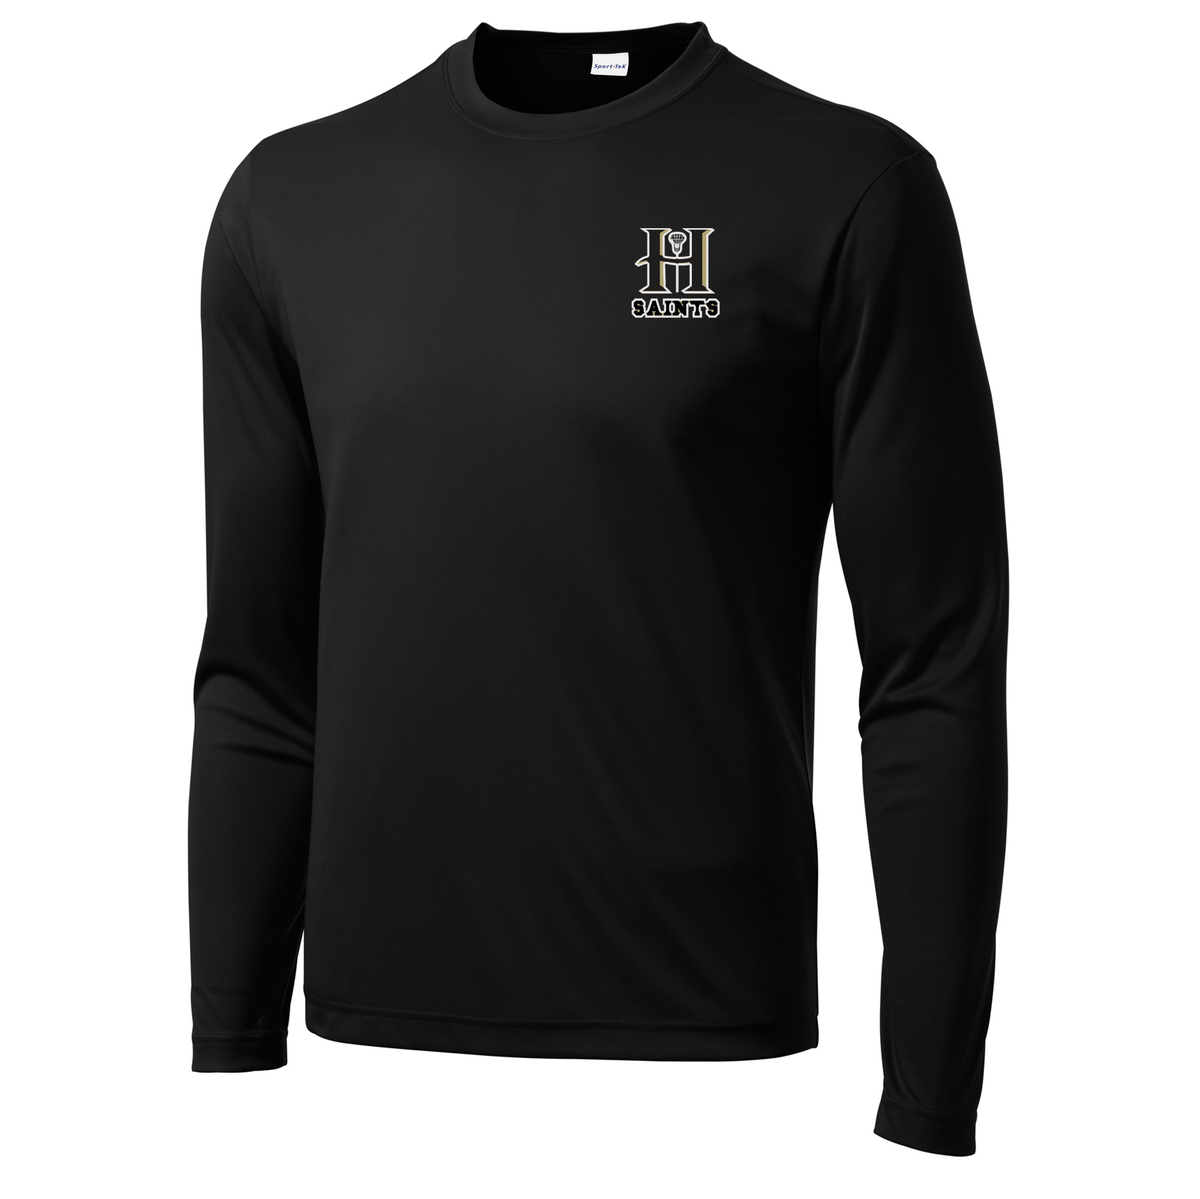 HAYLA Saints Black Long Sleeve Performance Shirt